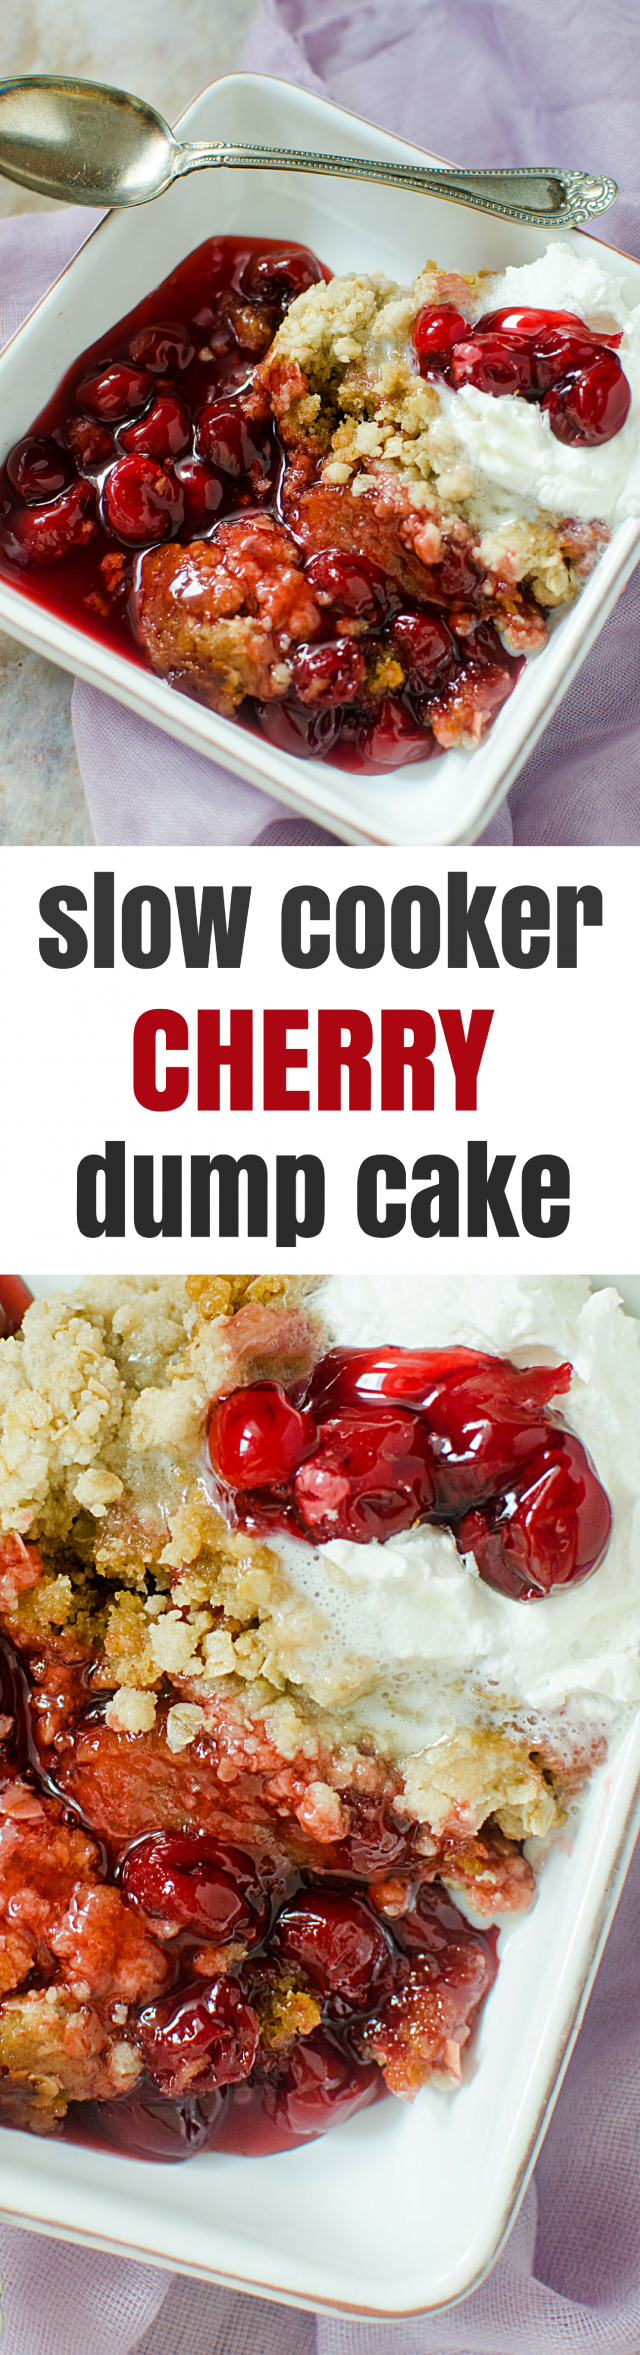 Crockpot Slow Cooker Cherry Cake Mix Dump Cake Recipe